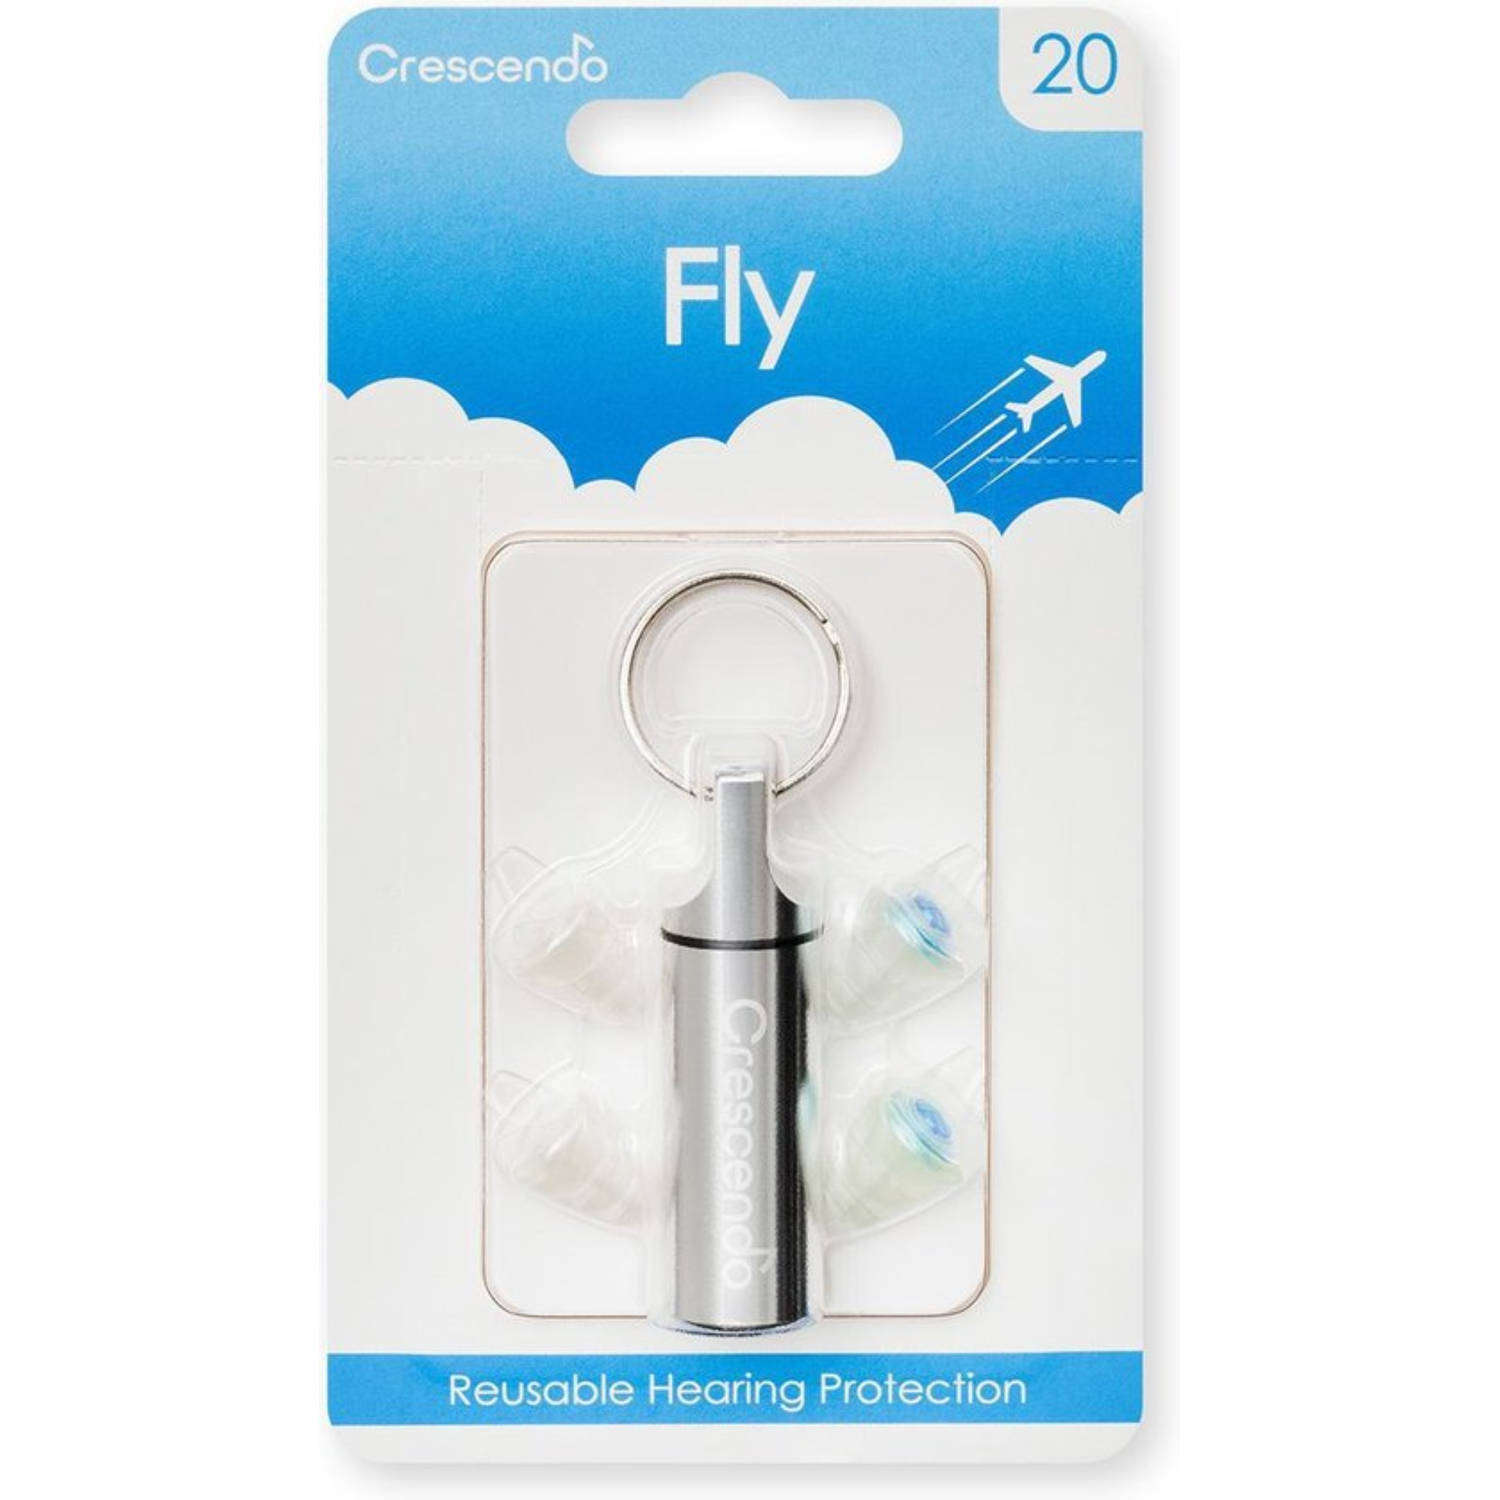 Crescendo Fly 20 - vlieg oordoppen - drukregeling